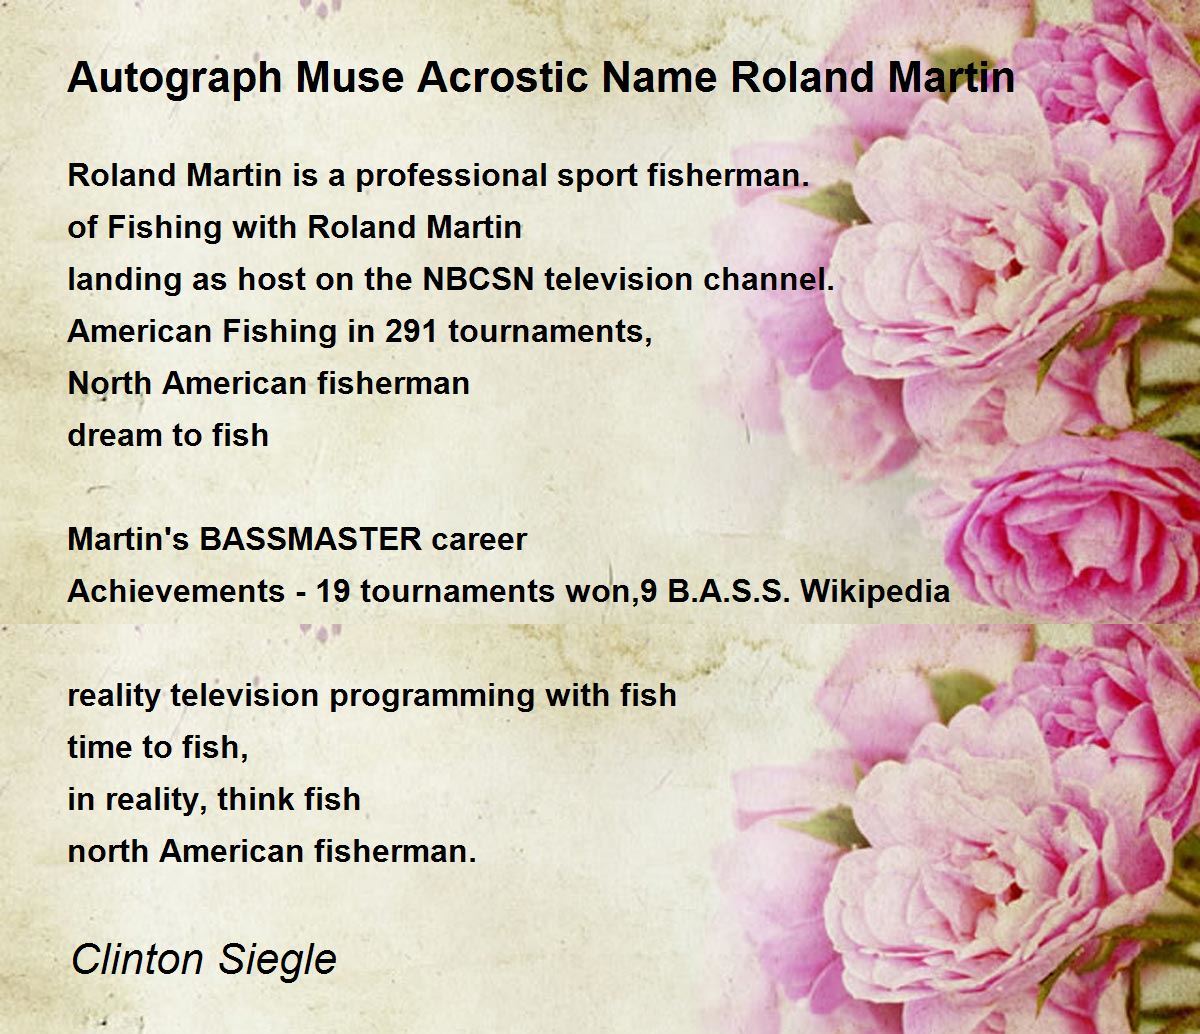 Autograph Muse Acrostic Name Roland Martin - Autograph Muse Acrostic Name  Roland Martin Poem by Clinton Siegle